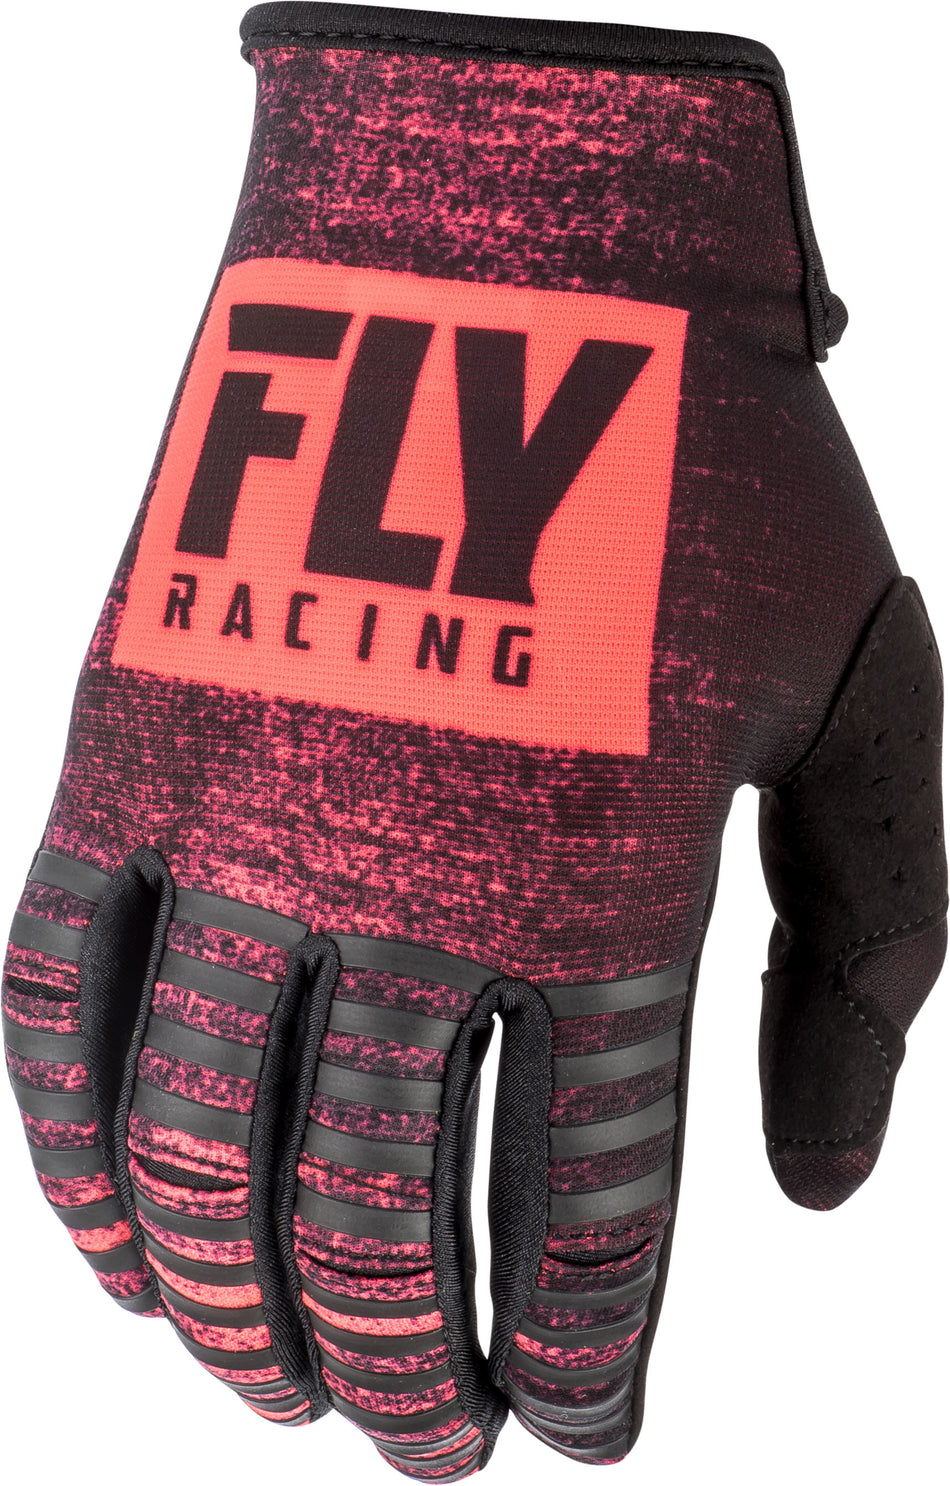 FLY RACING Kinetic Noiz Gloves Neon Red/Black Sz 07 372-51207